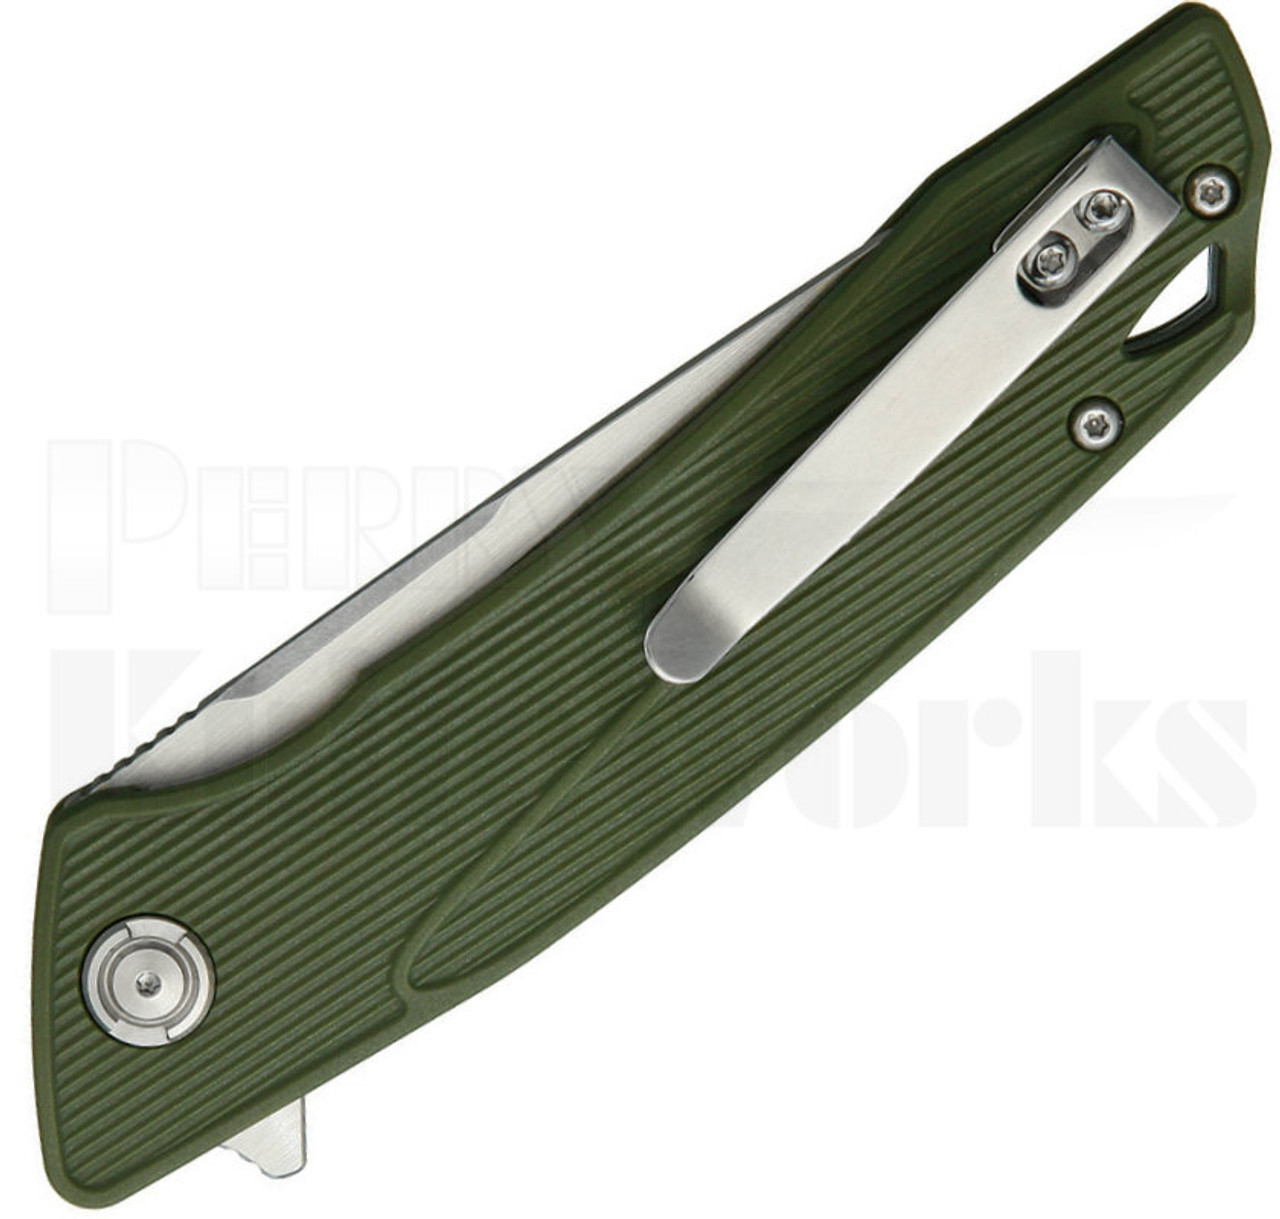 Bestech Knives Spike Knife Green GFN BG09B-2 Closed